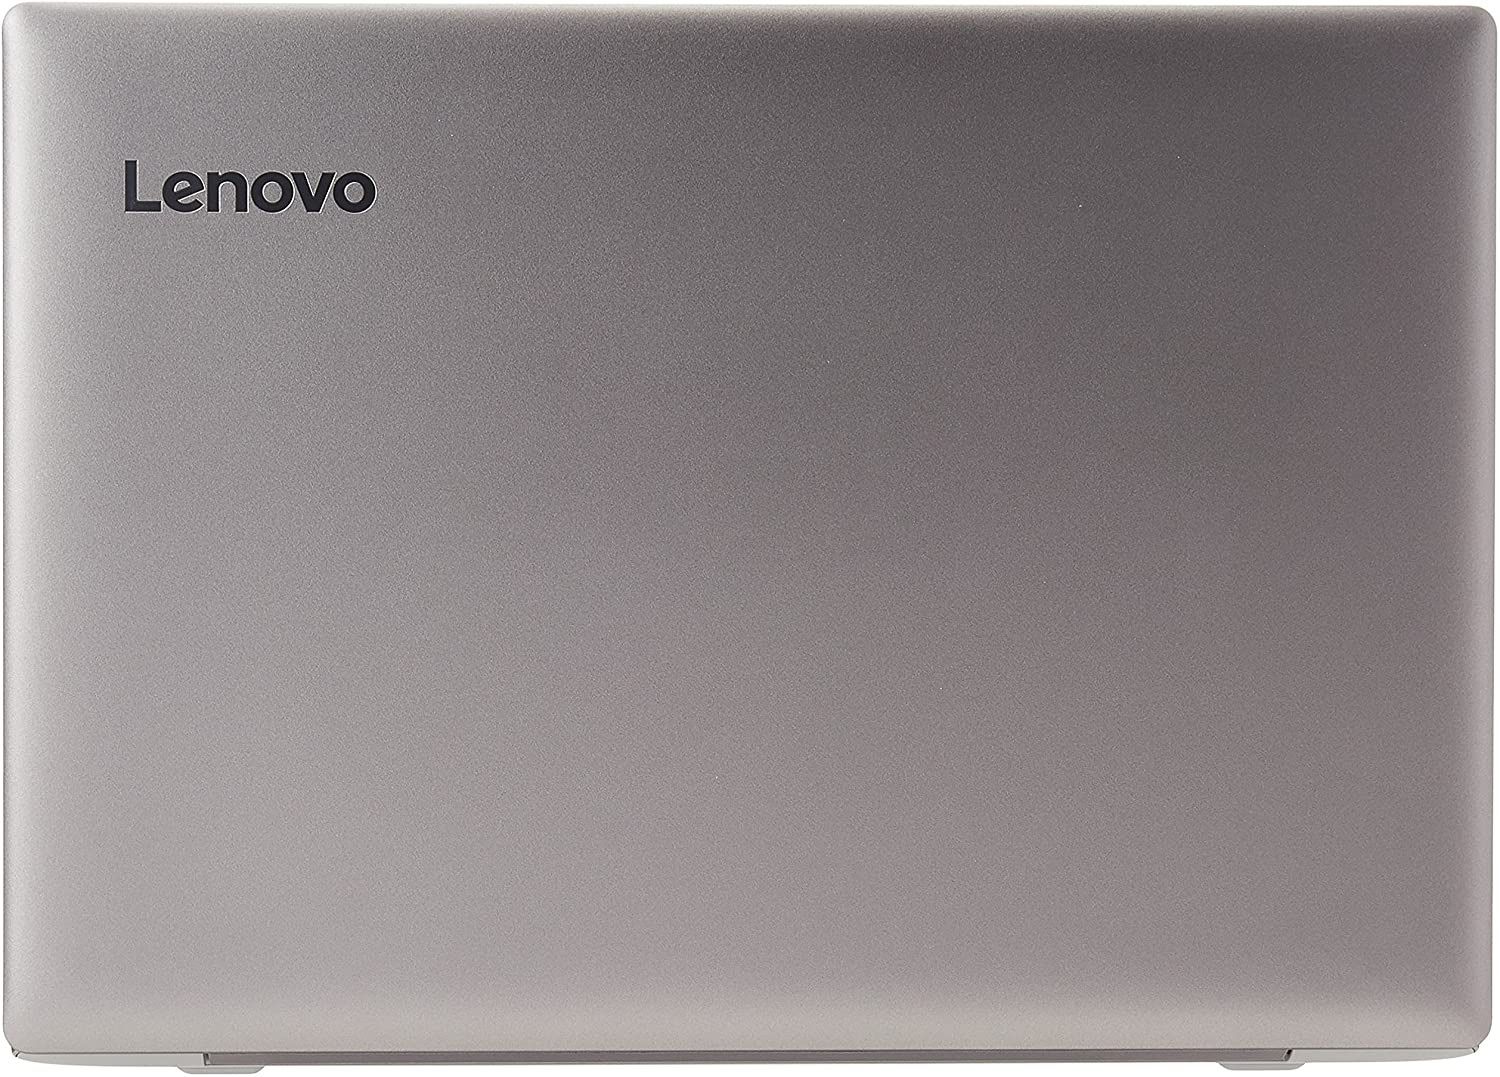 Lenovo IdeaPad. 14” Intel Celeron N3350. Grey. Brand new in box